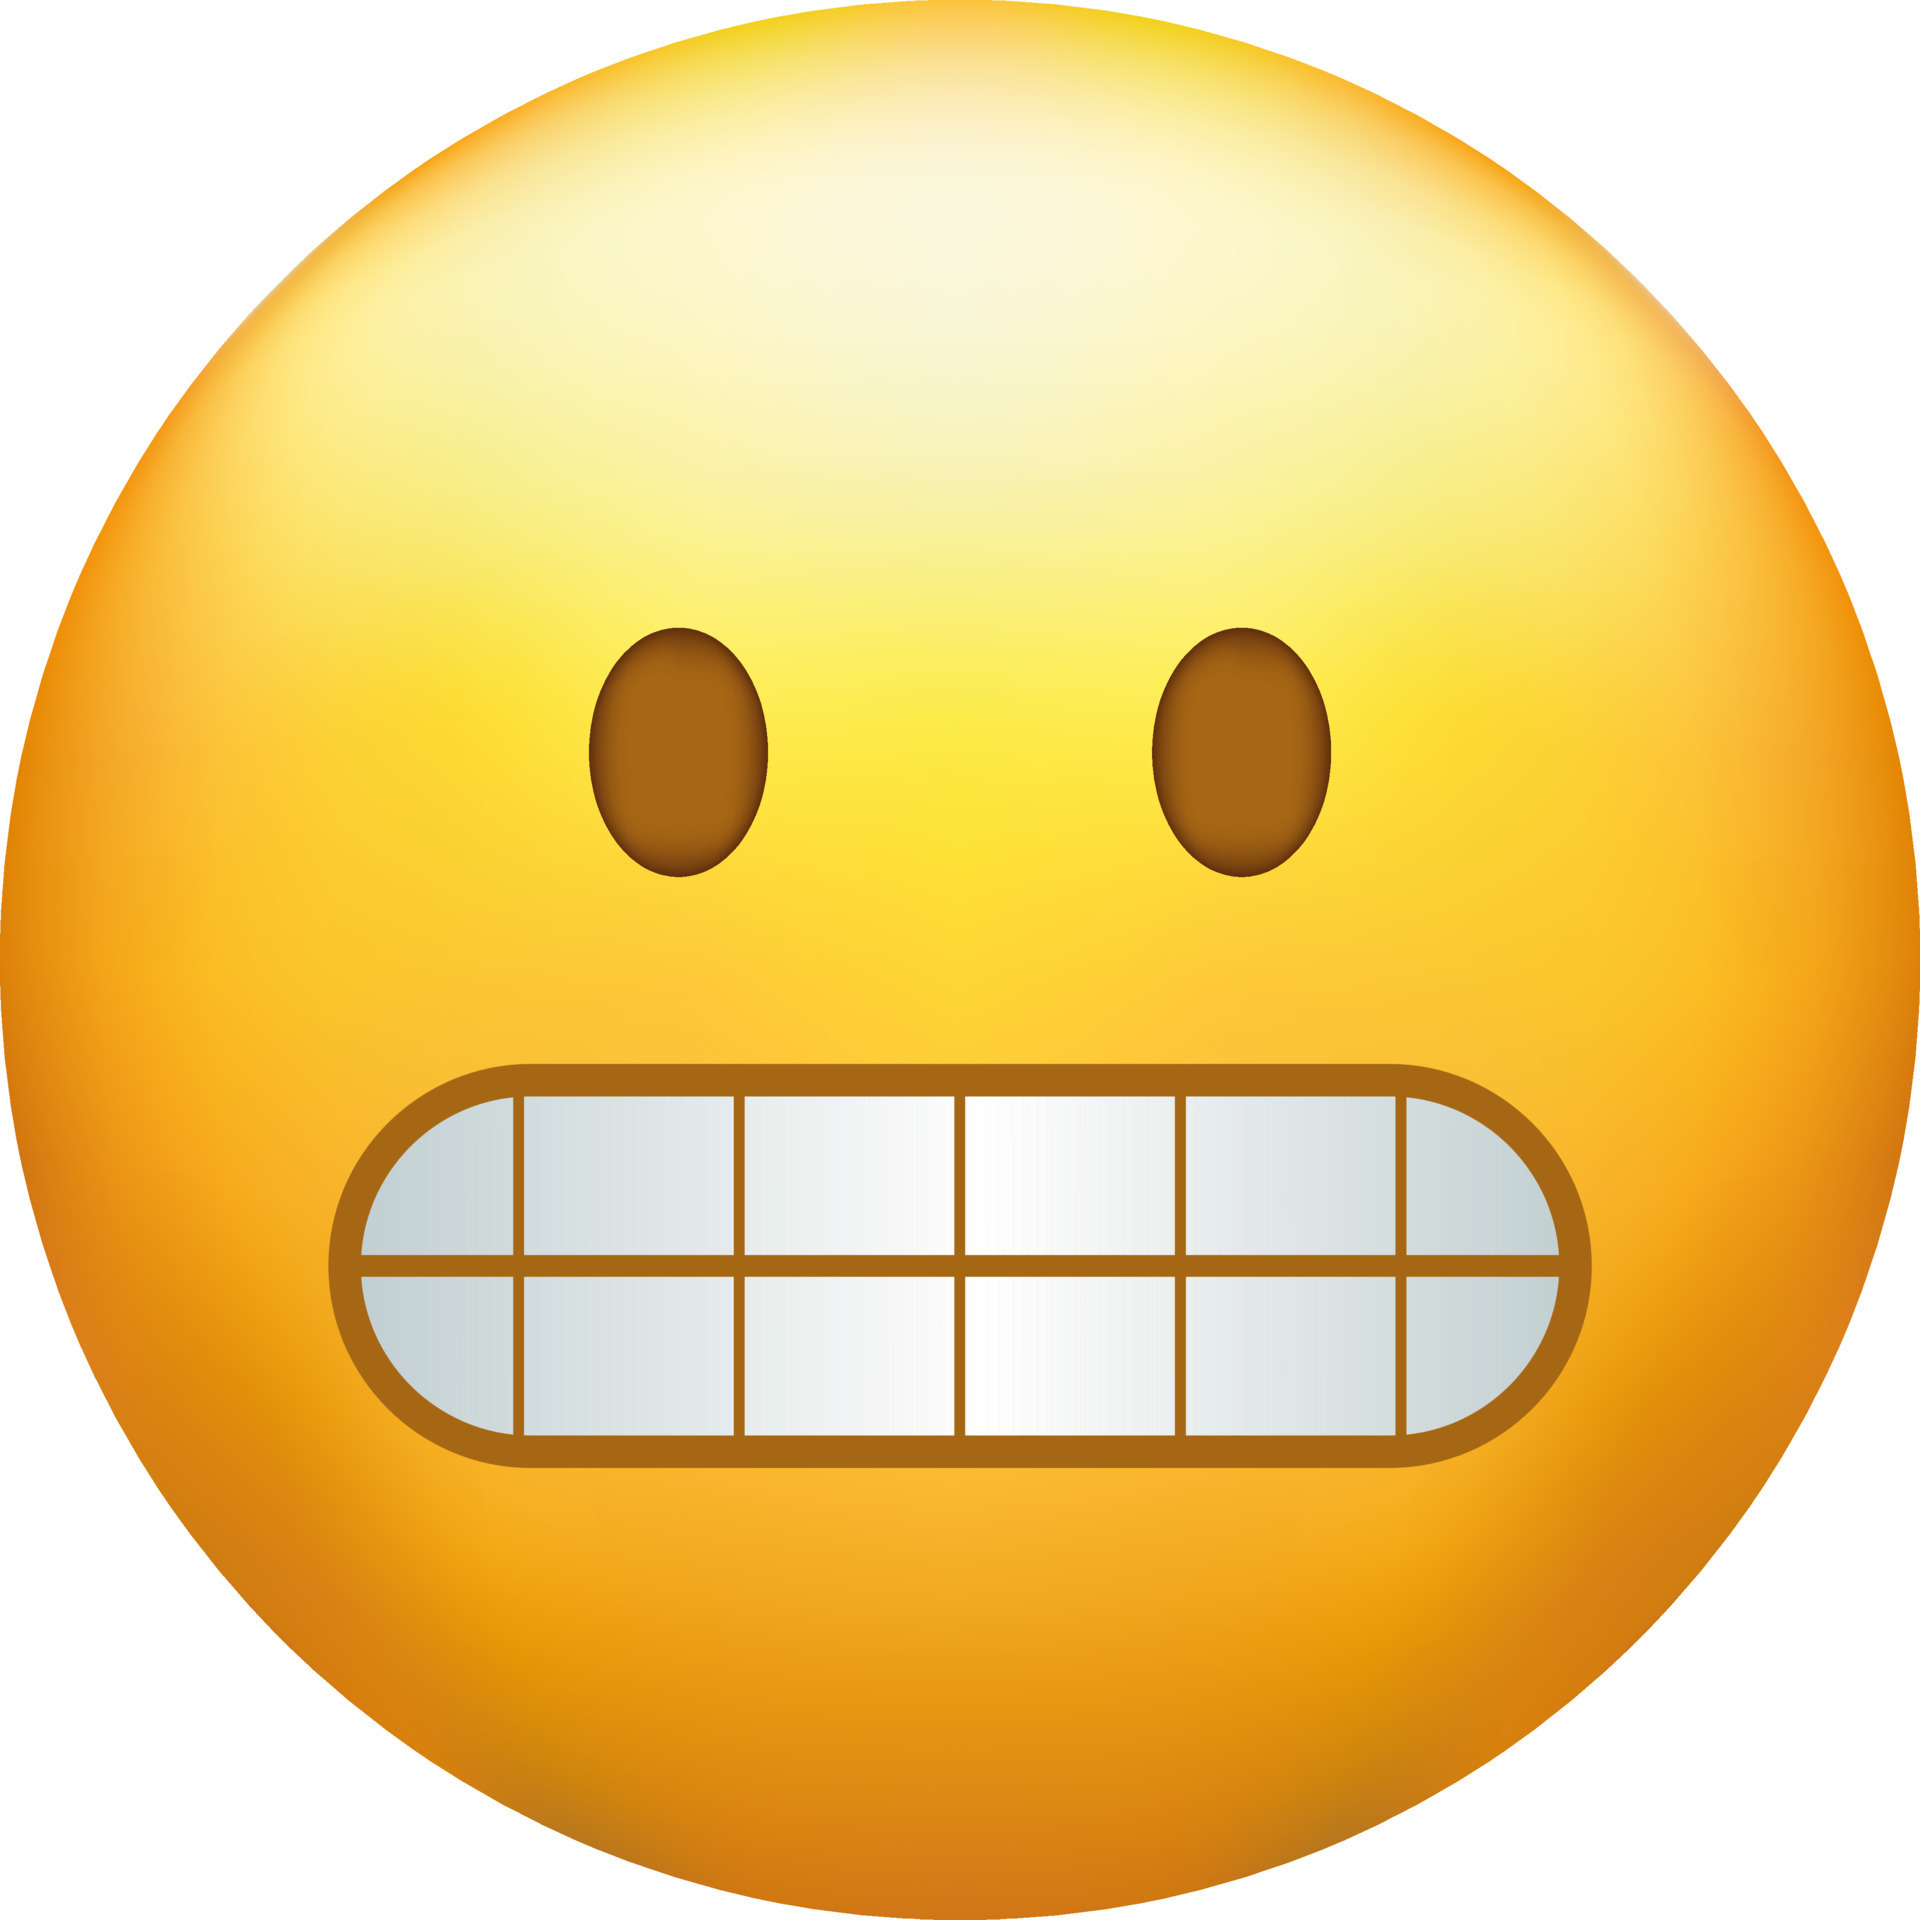 Face grimacing emoji emojipedia keyboard laughing words hard dictionary size